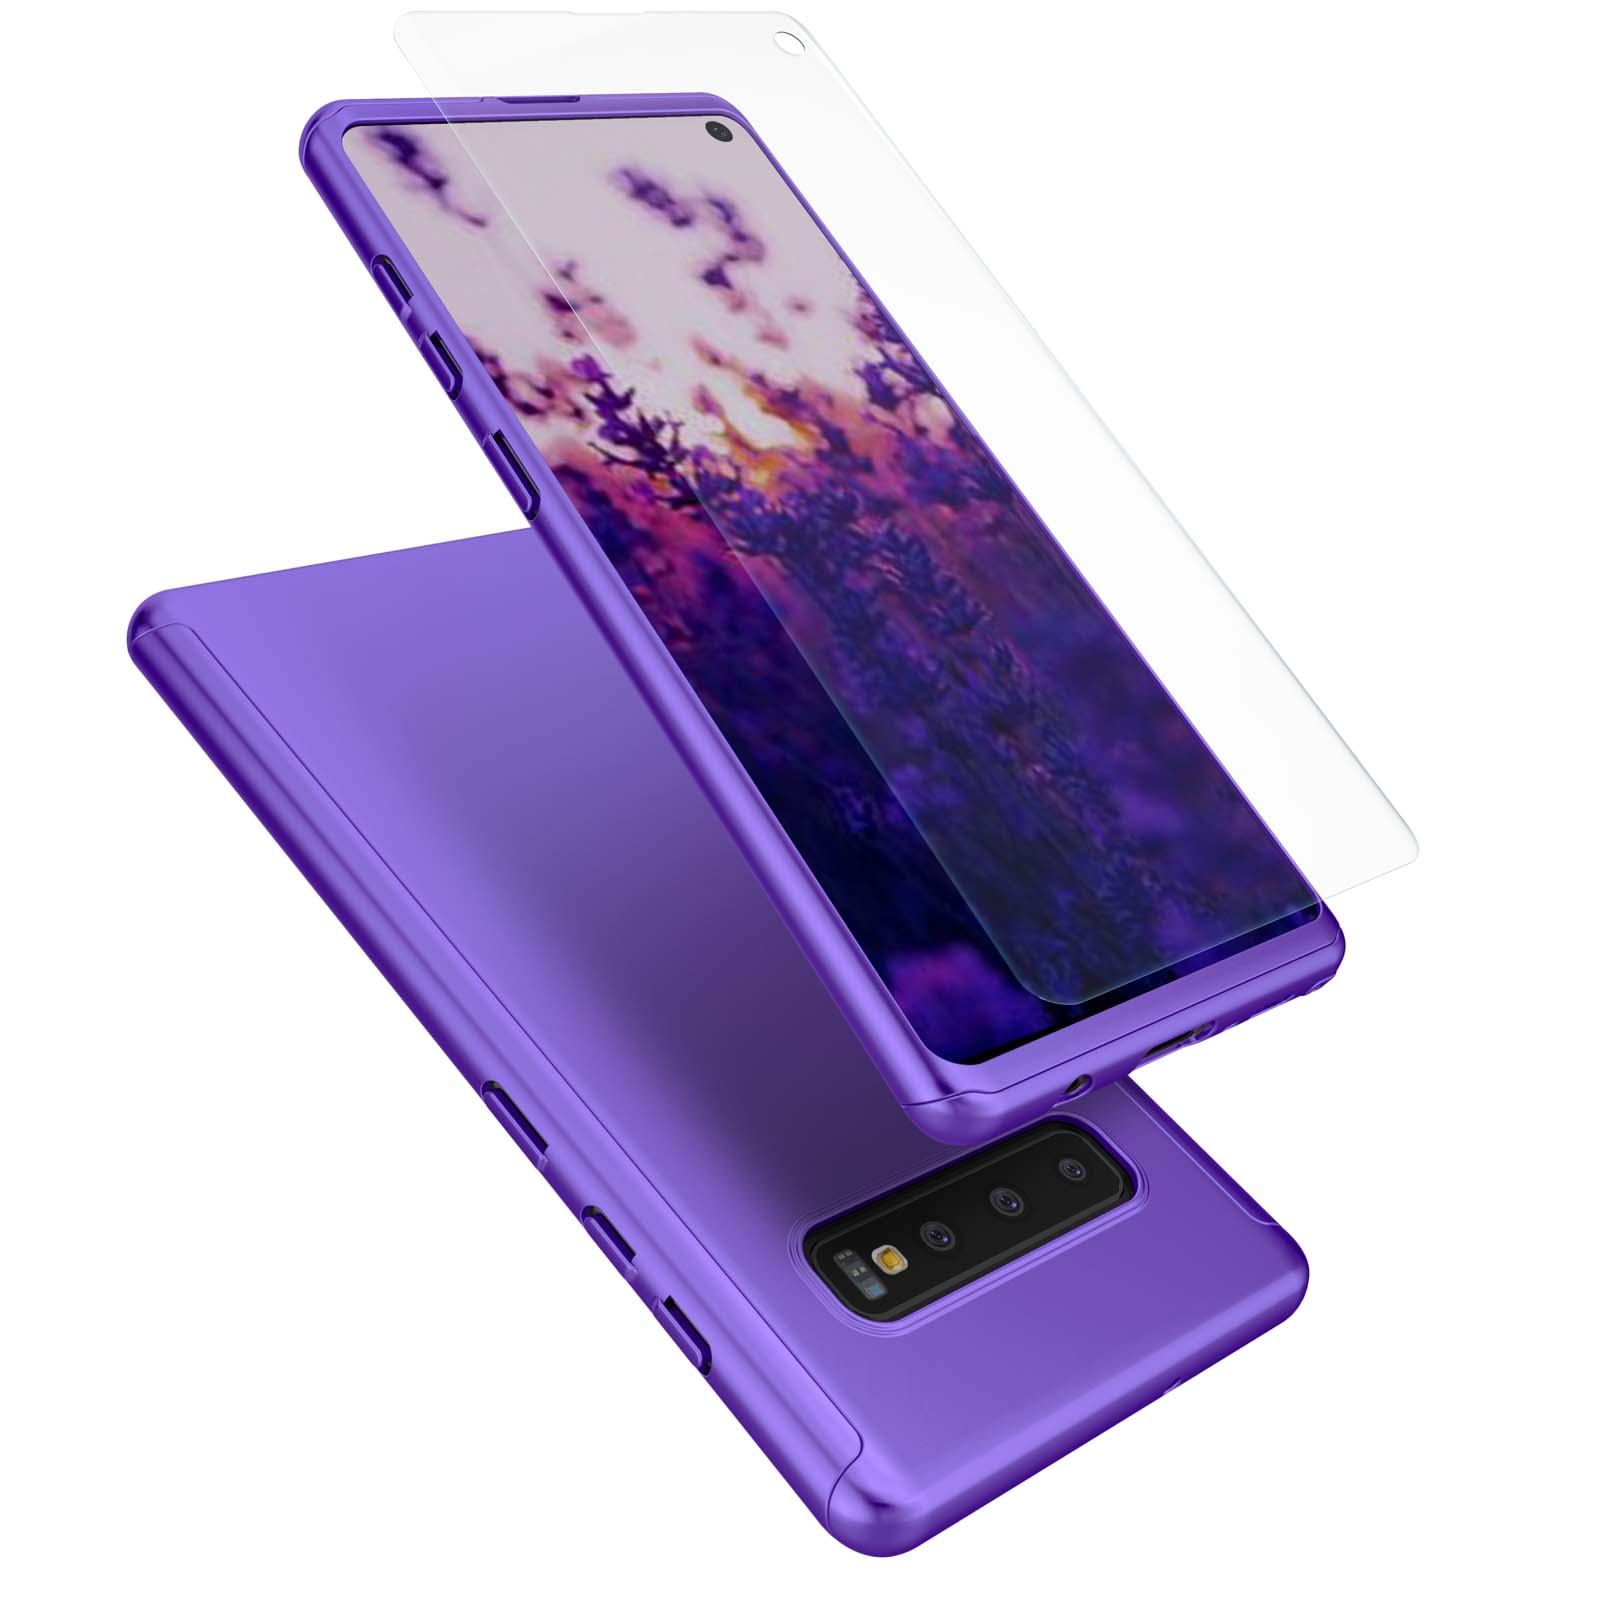 Samsung Galaxy S10 Case, Case For Galaxy S10, Galaxy S10 Screen Protector, Njjex Thin Premium Dual Layer Hard Case for Galaxy S10 with Tempered Glass Screen Protector For Galalxy S10 6.1"-Purple - image 1 of 5